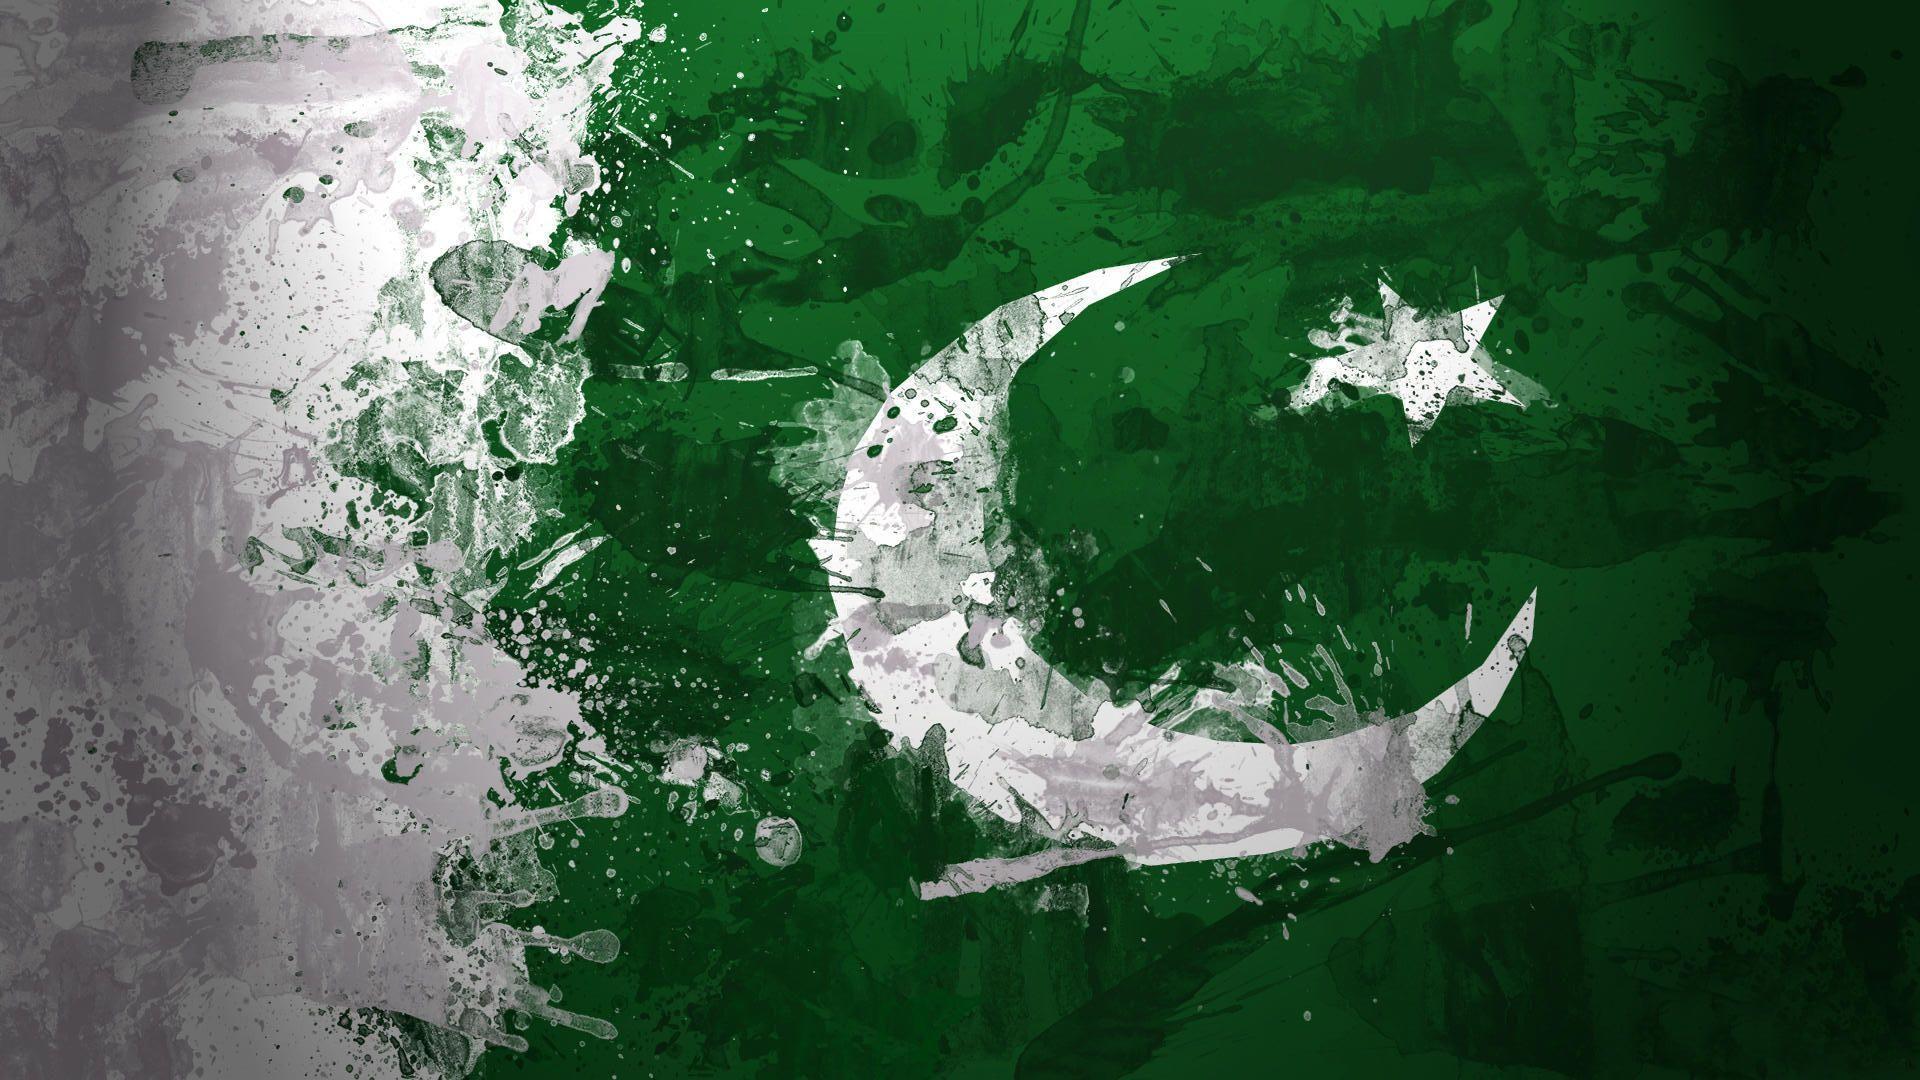 Pakistan Flag Wallpaper HD 2015